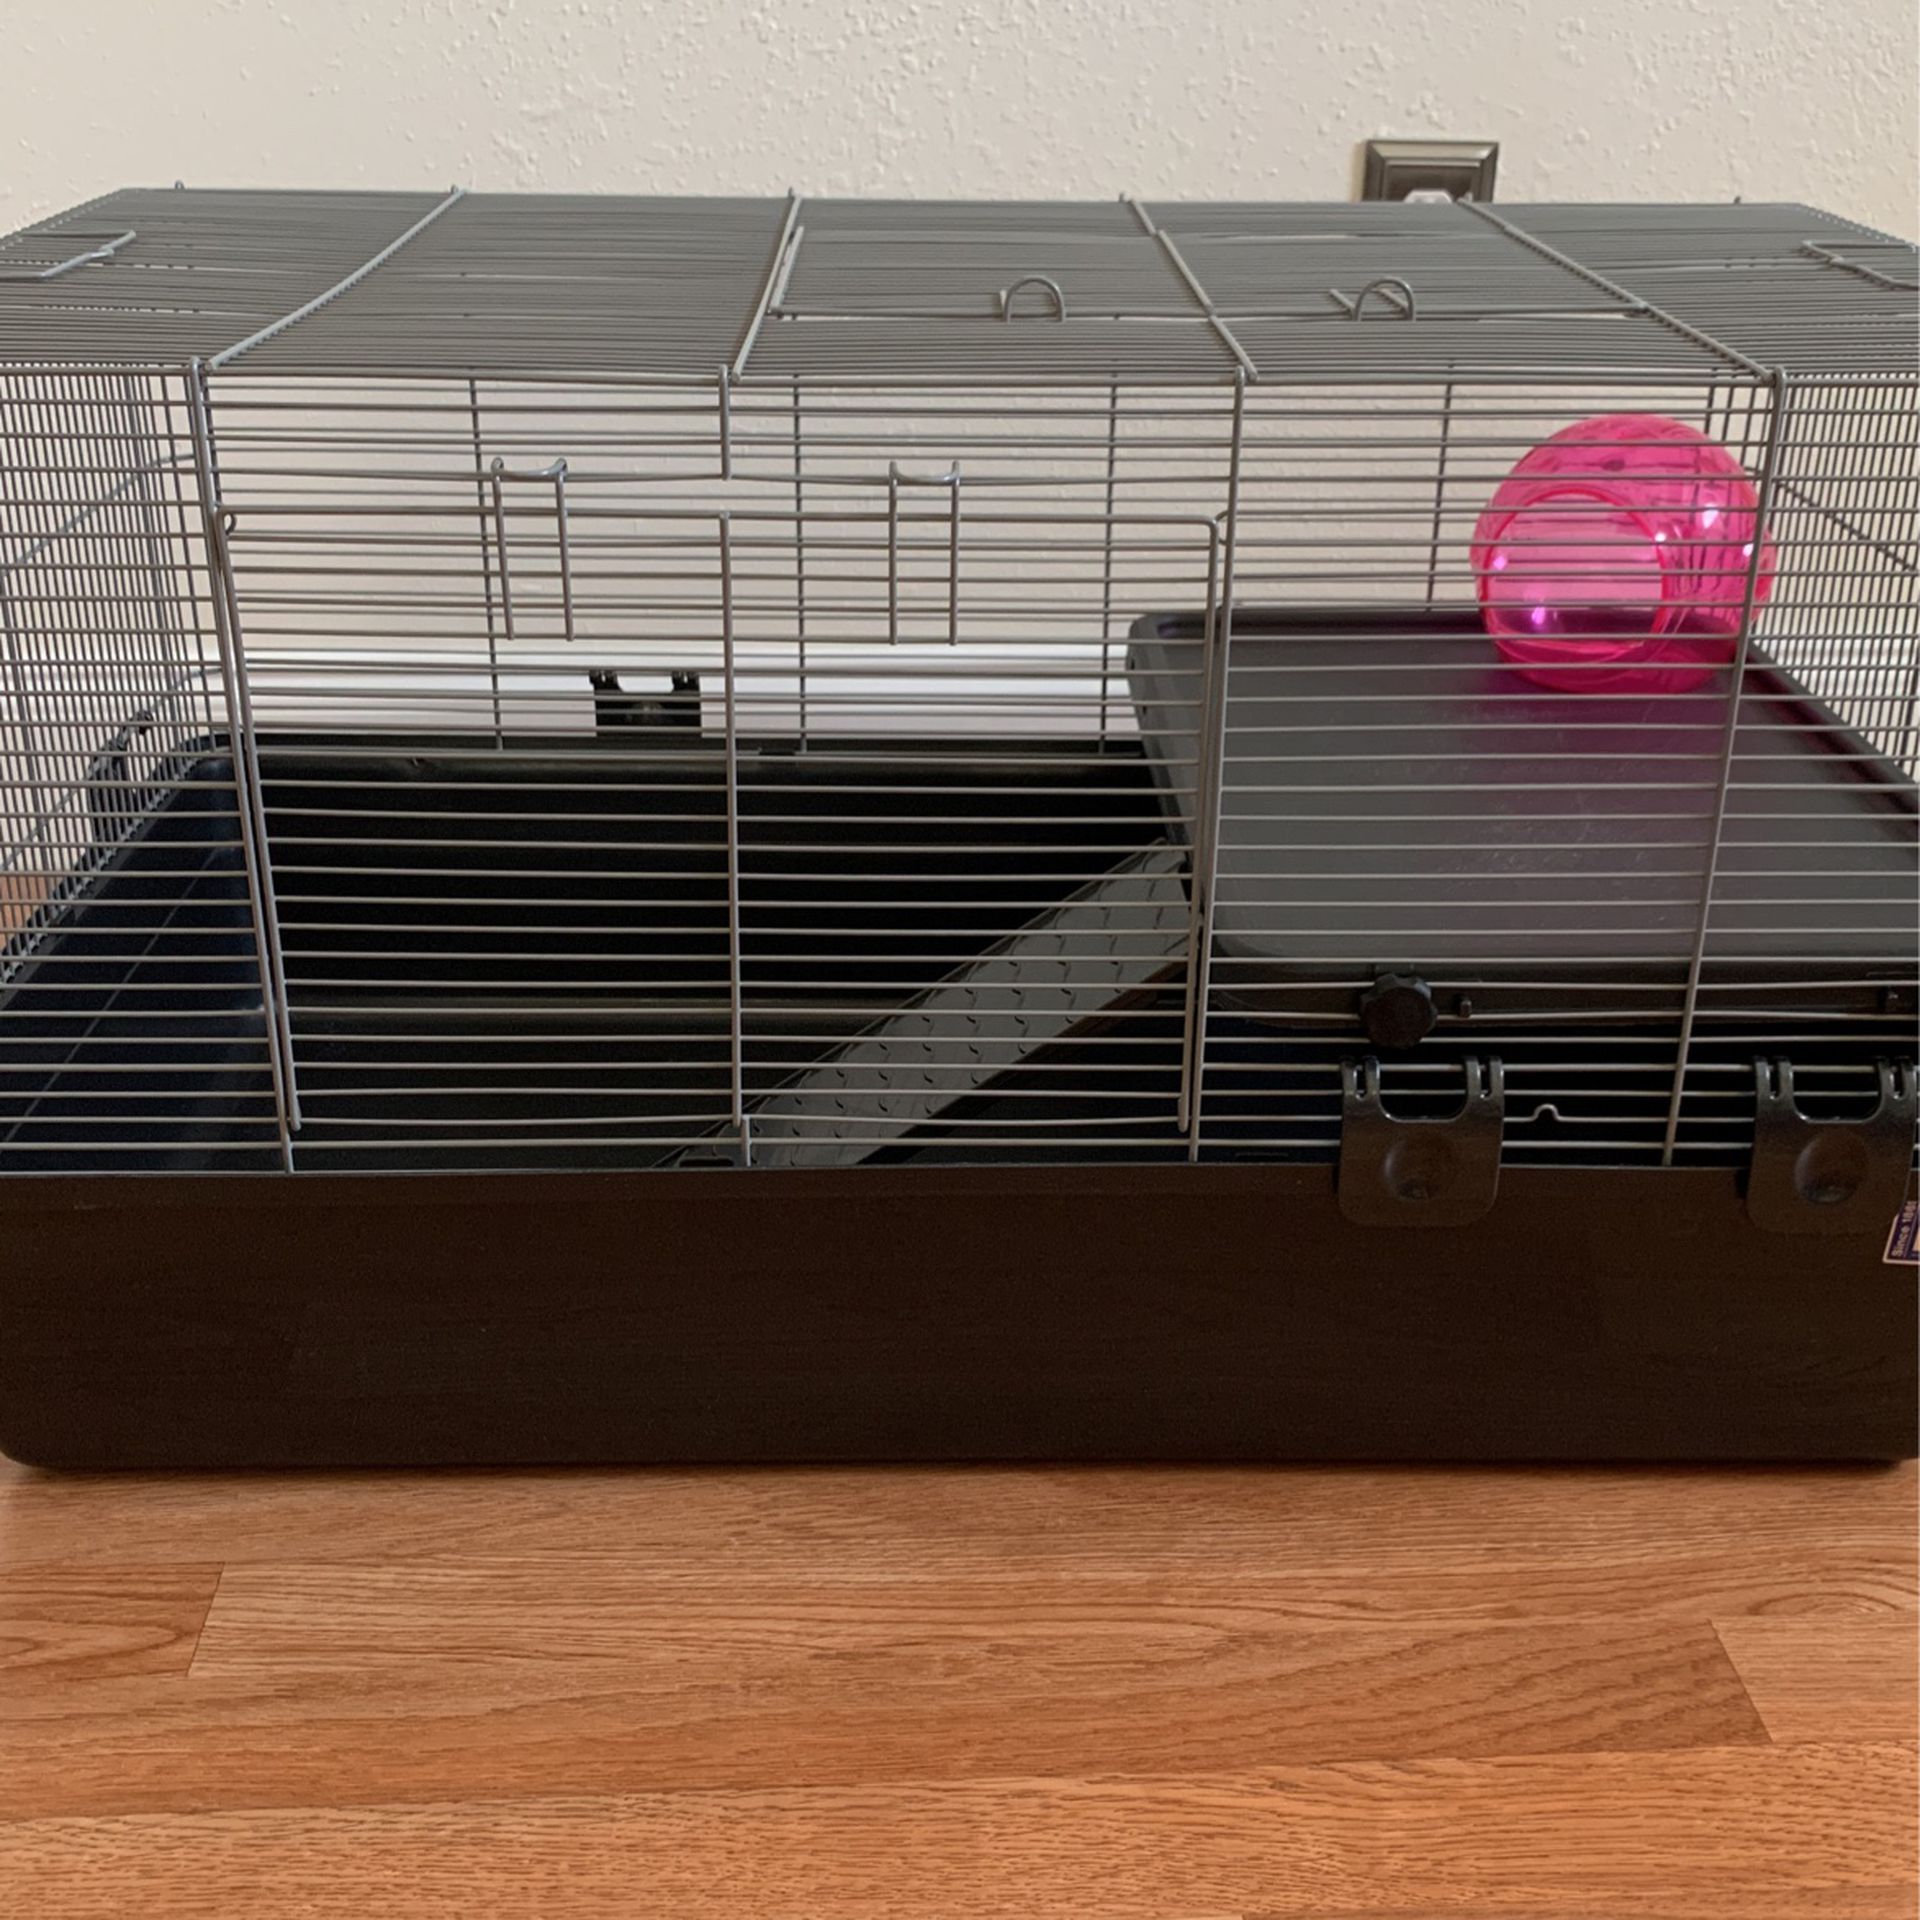 Prevue Brand Pet Cage Hamster Cage